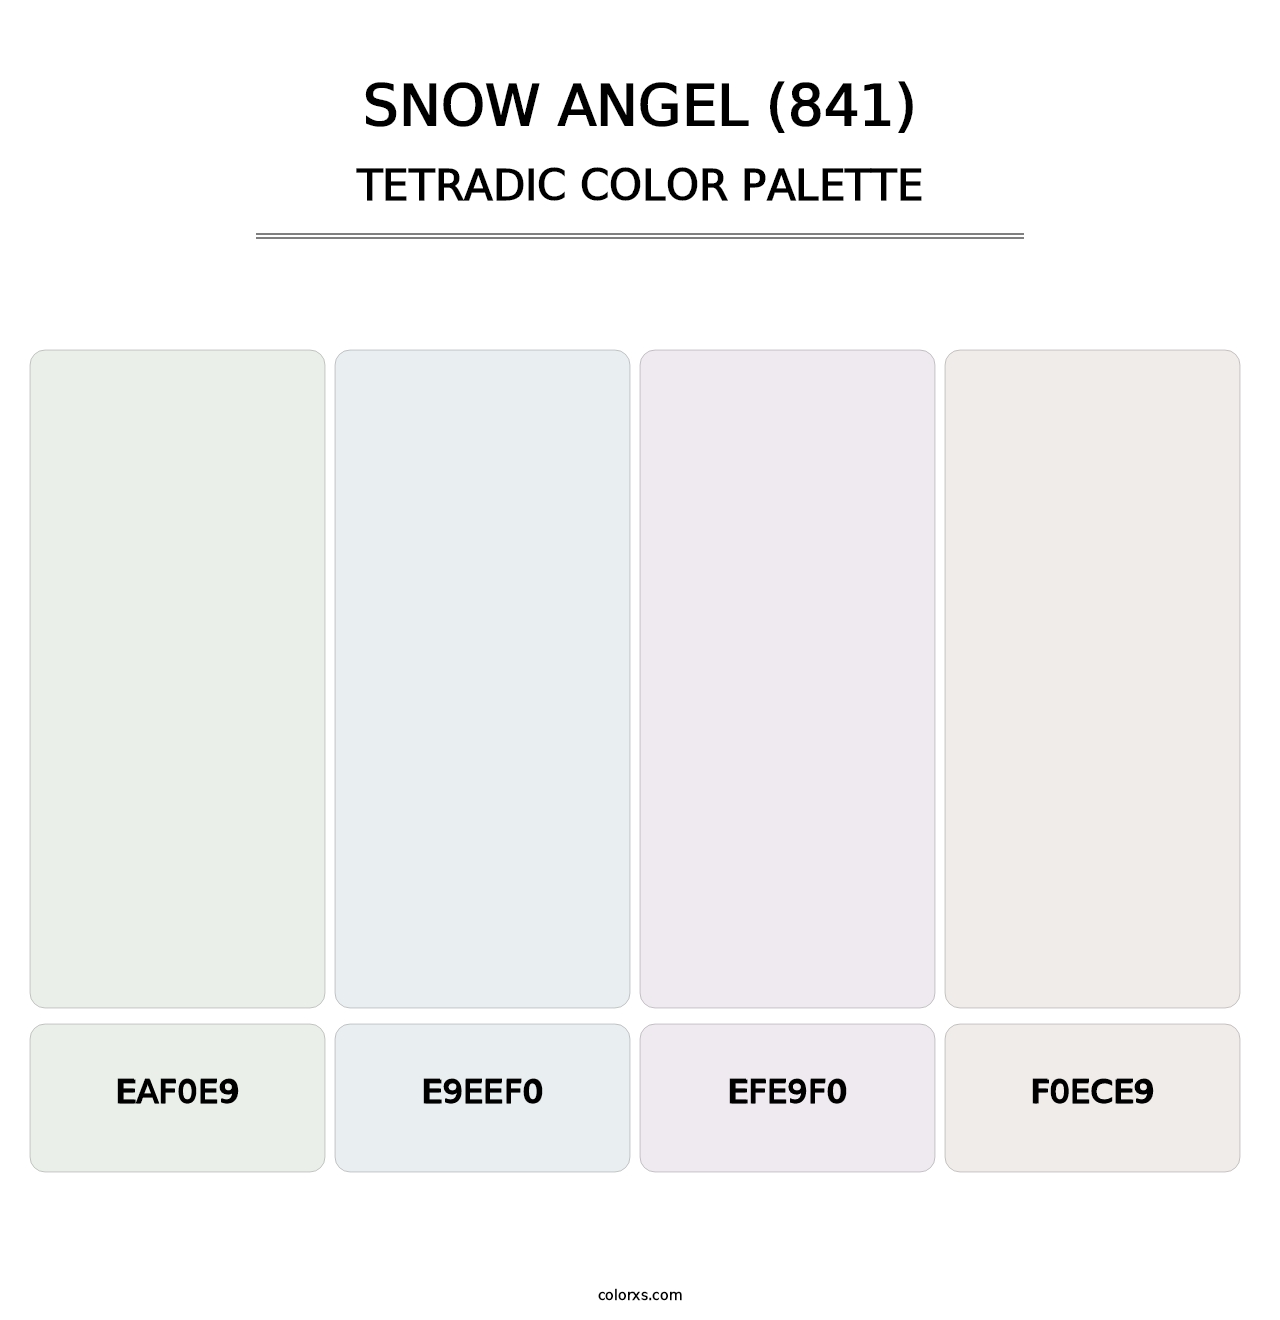 Snow Angel (841) - Tetradic Color Palette